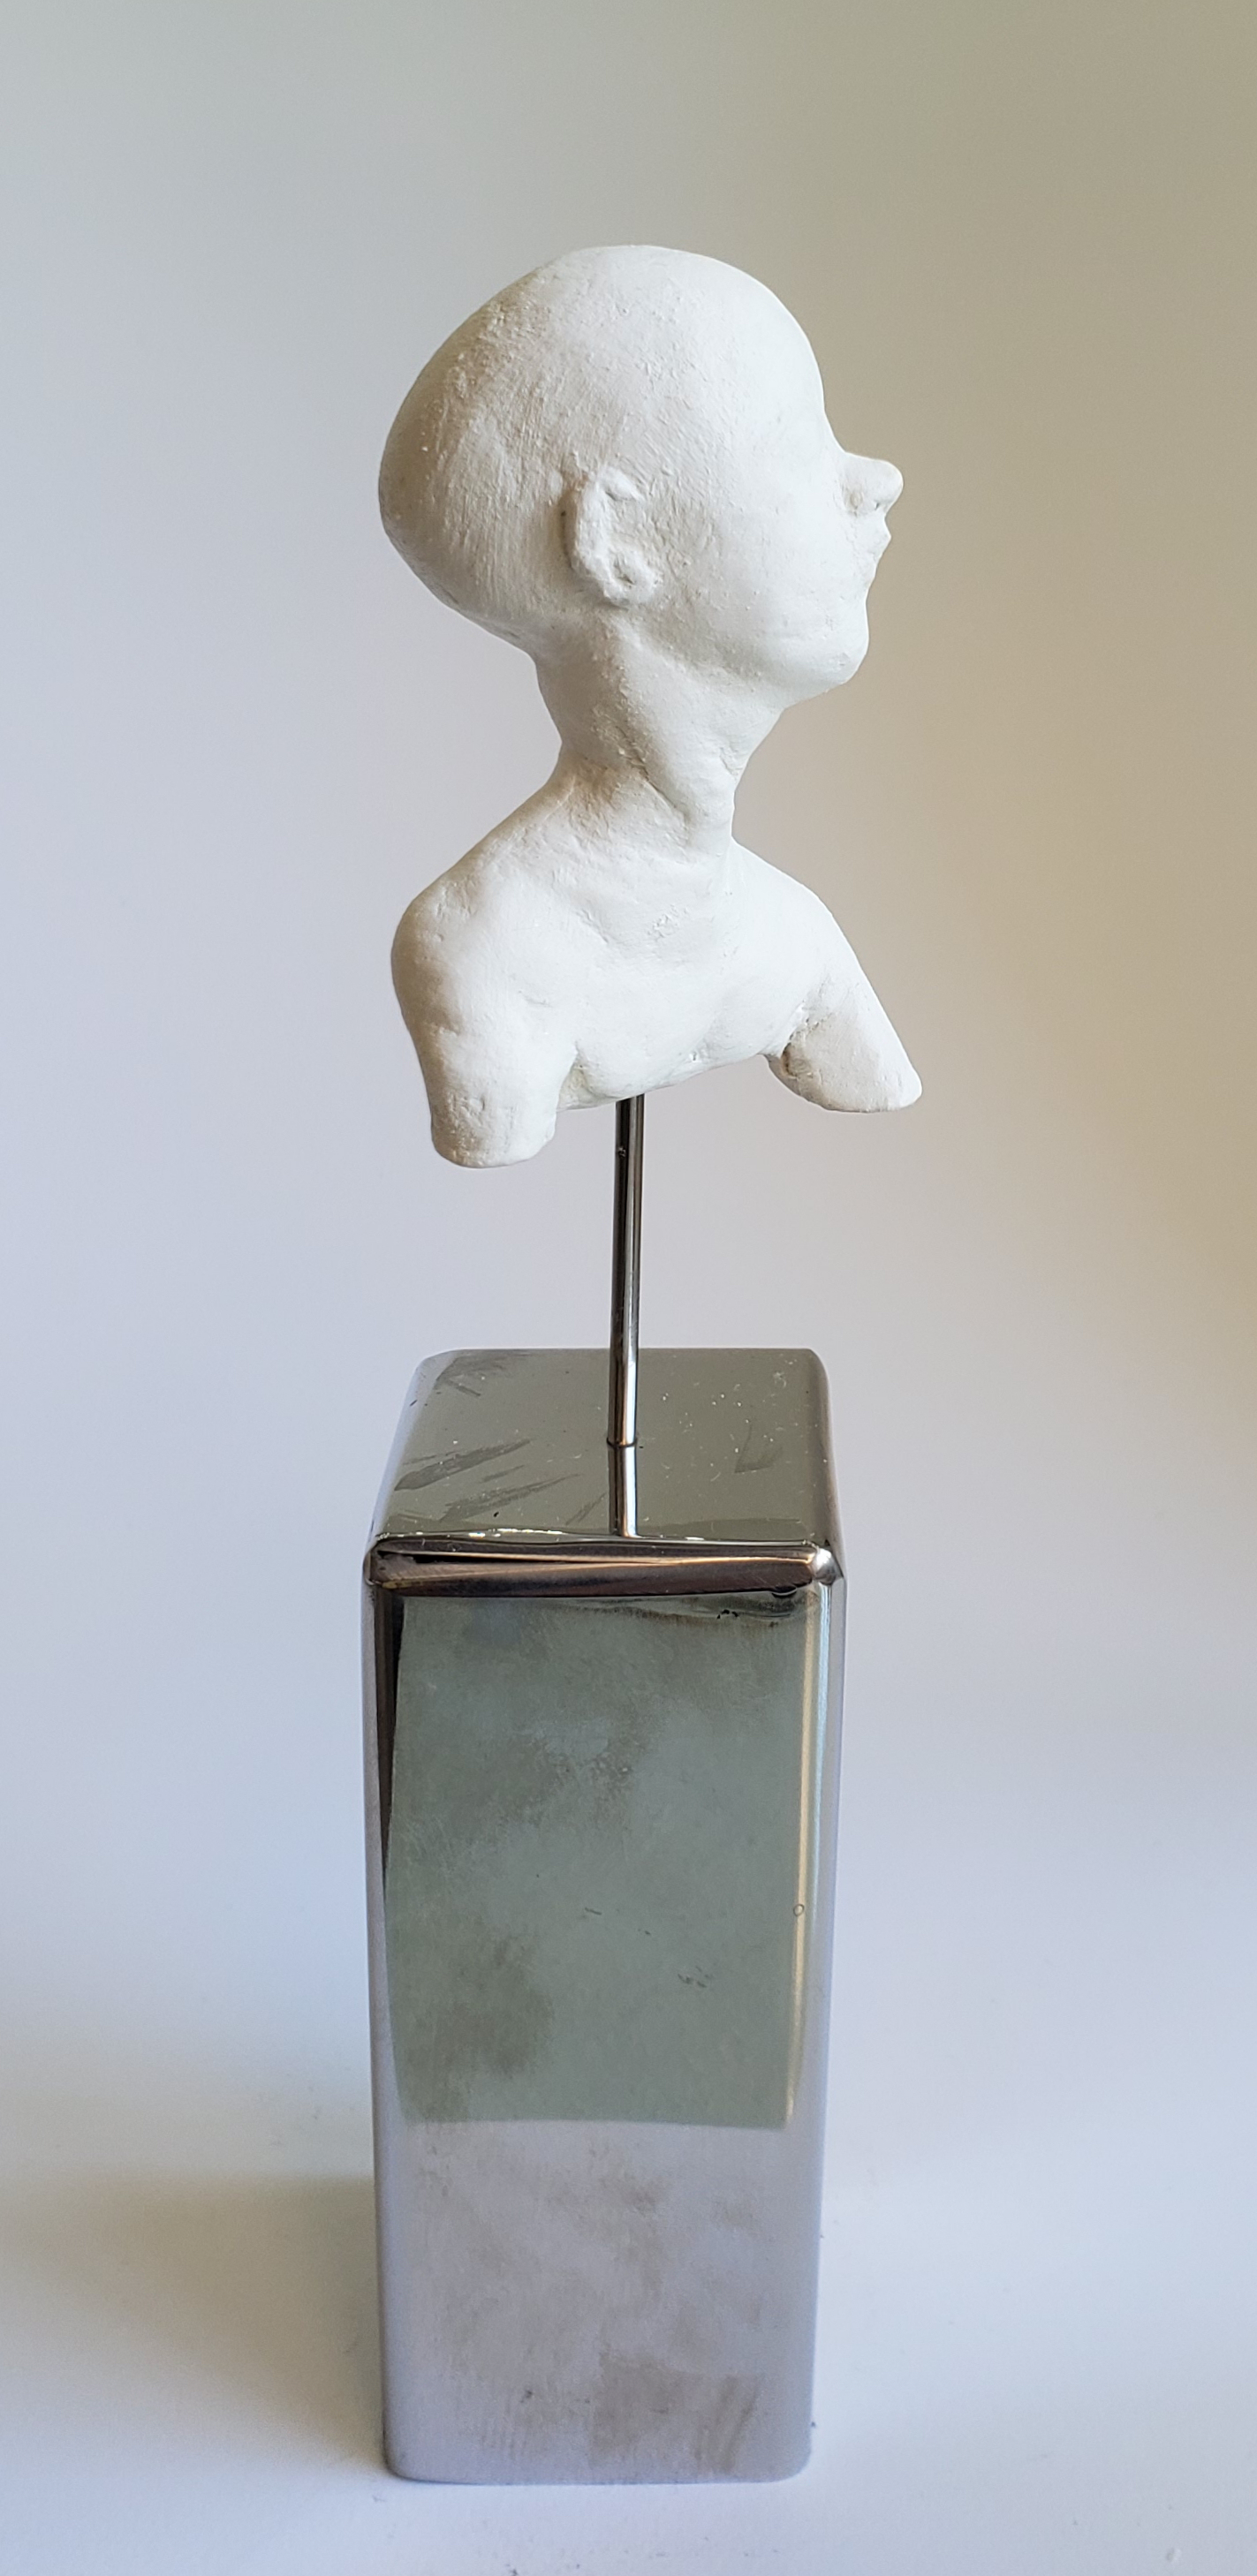 Newborn by Sue Rosalind Vesely | Lethbridge 20000 2022 Finalists | Lethbridge Gallery